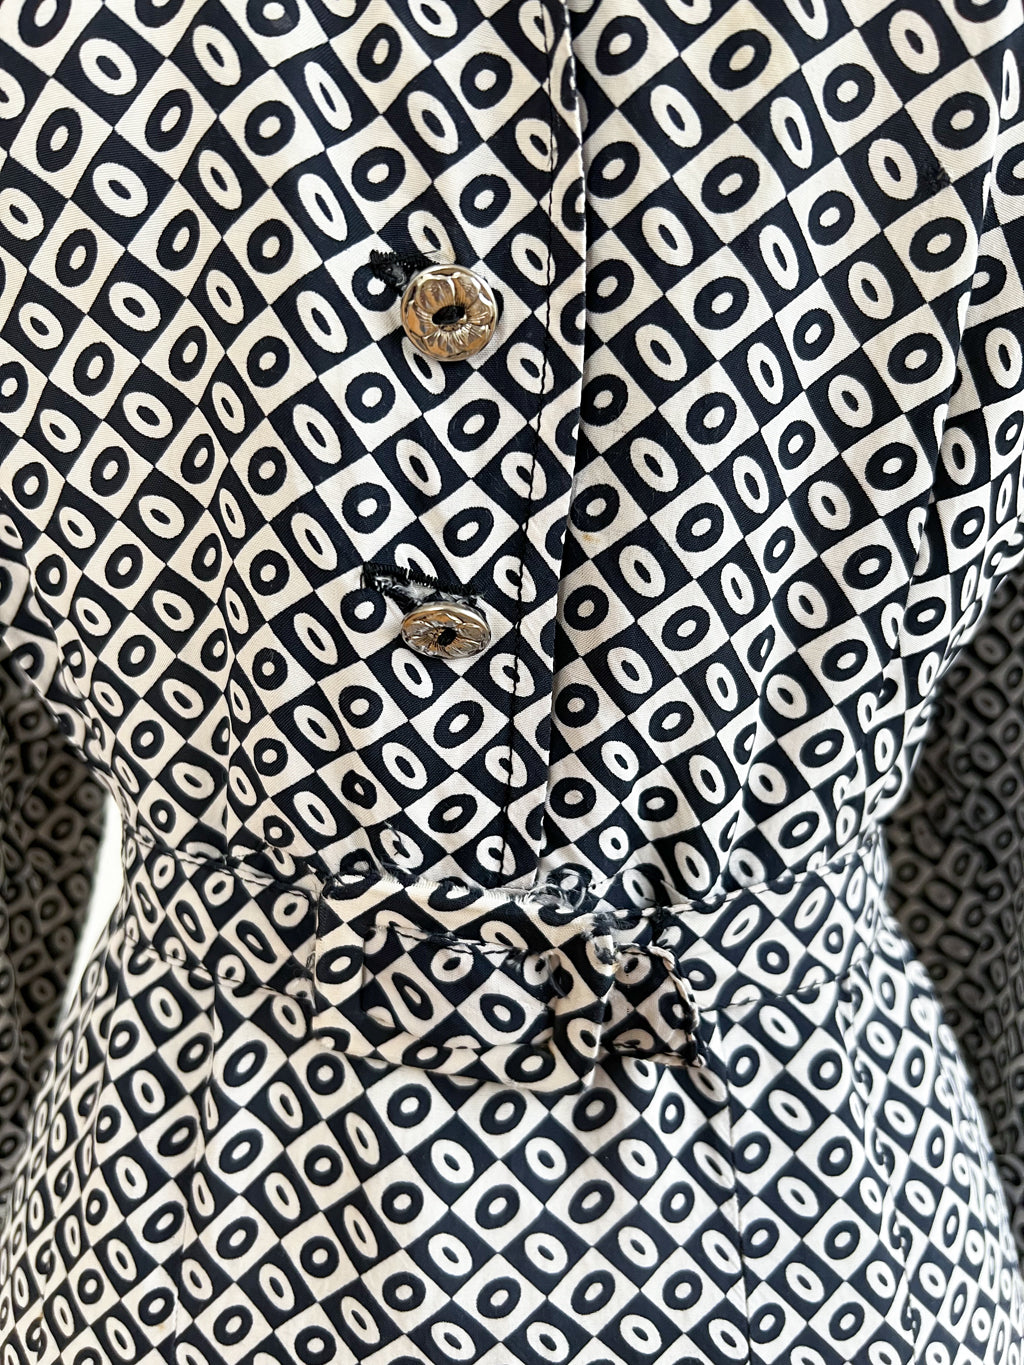 Vintage 1940s Cold Rayon Print Dress - VOLUP Black White Deco Donuts + Checkerboard Shirtwaist Size L - XL